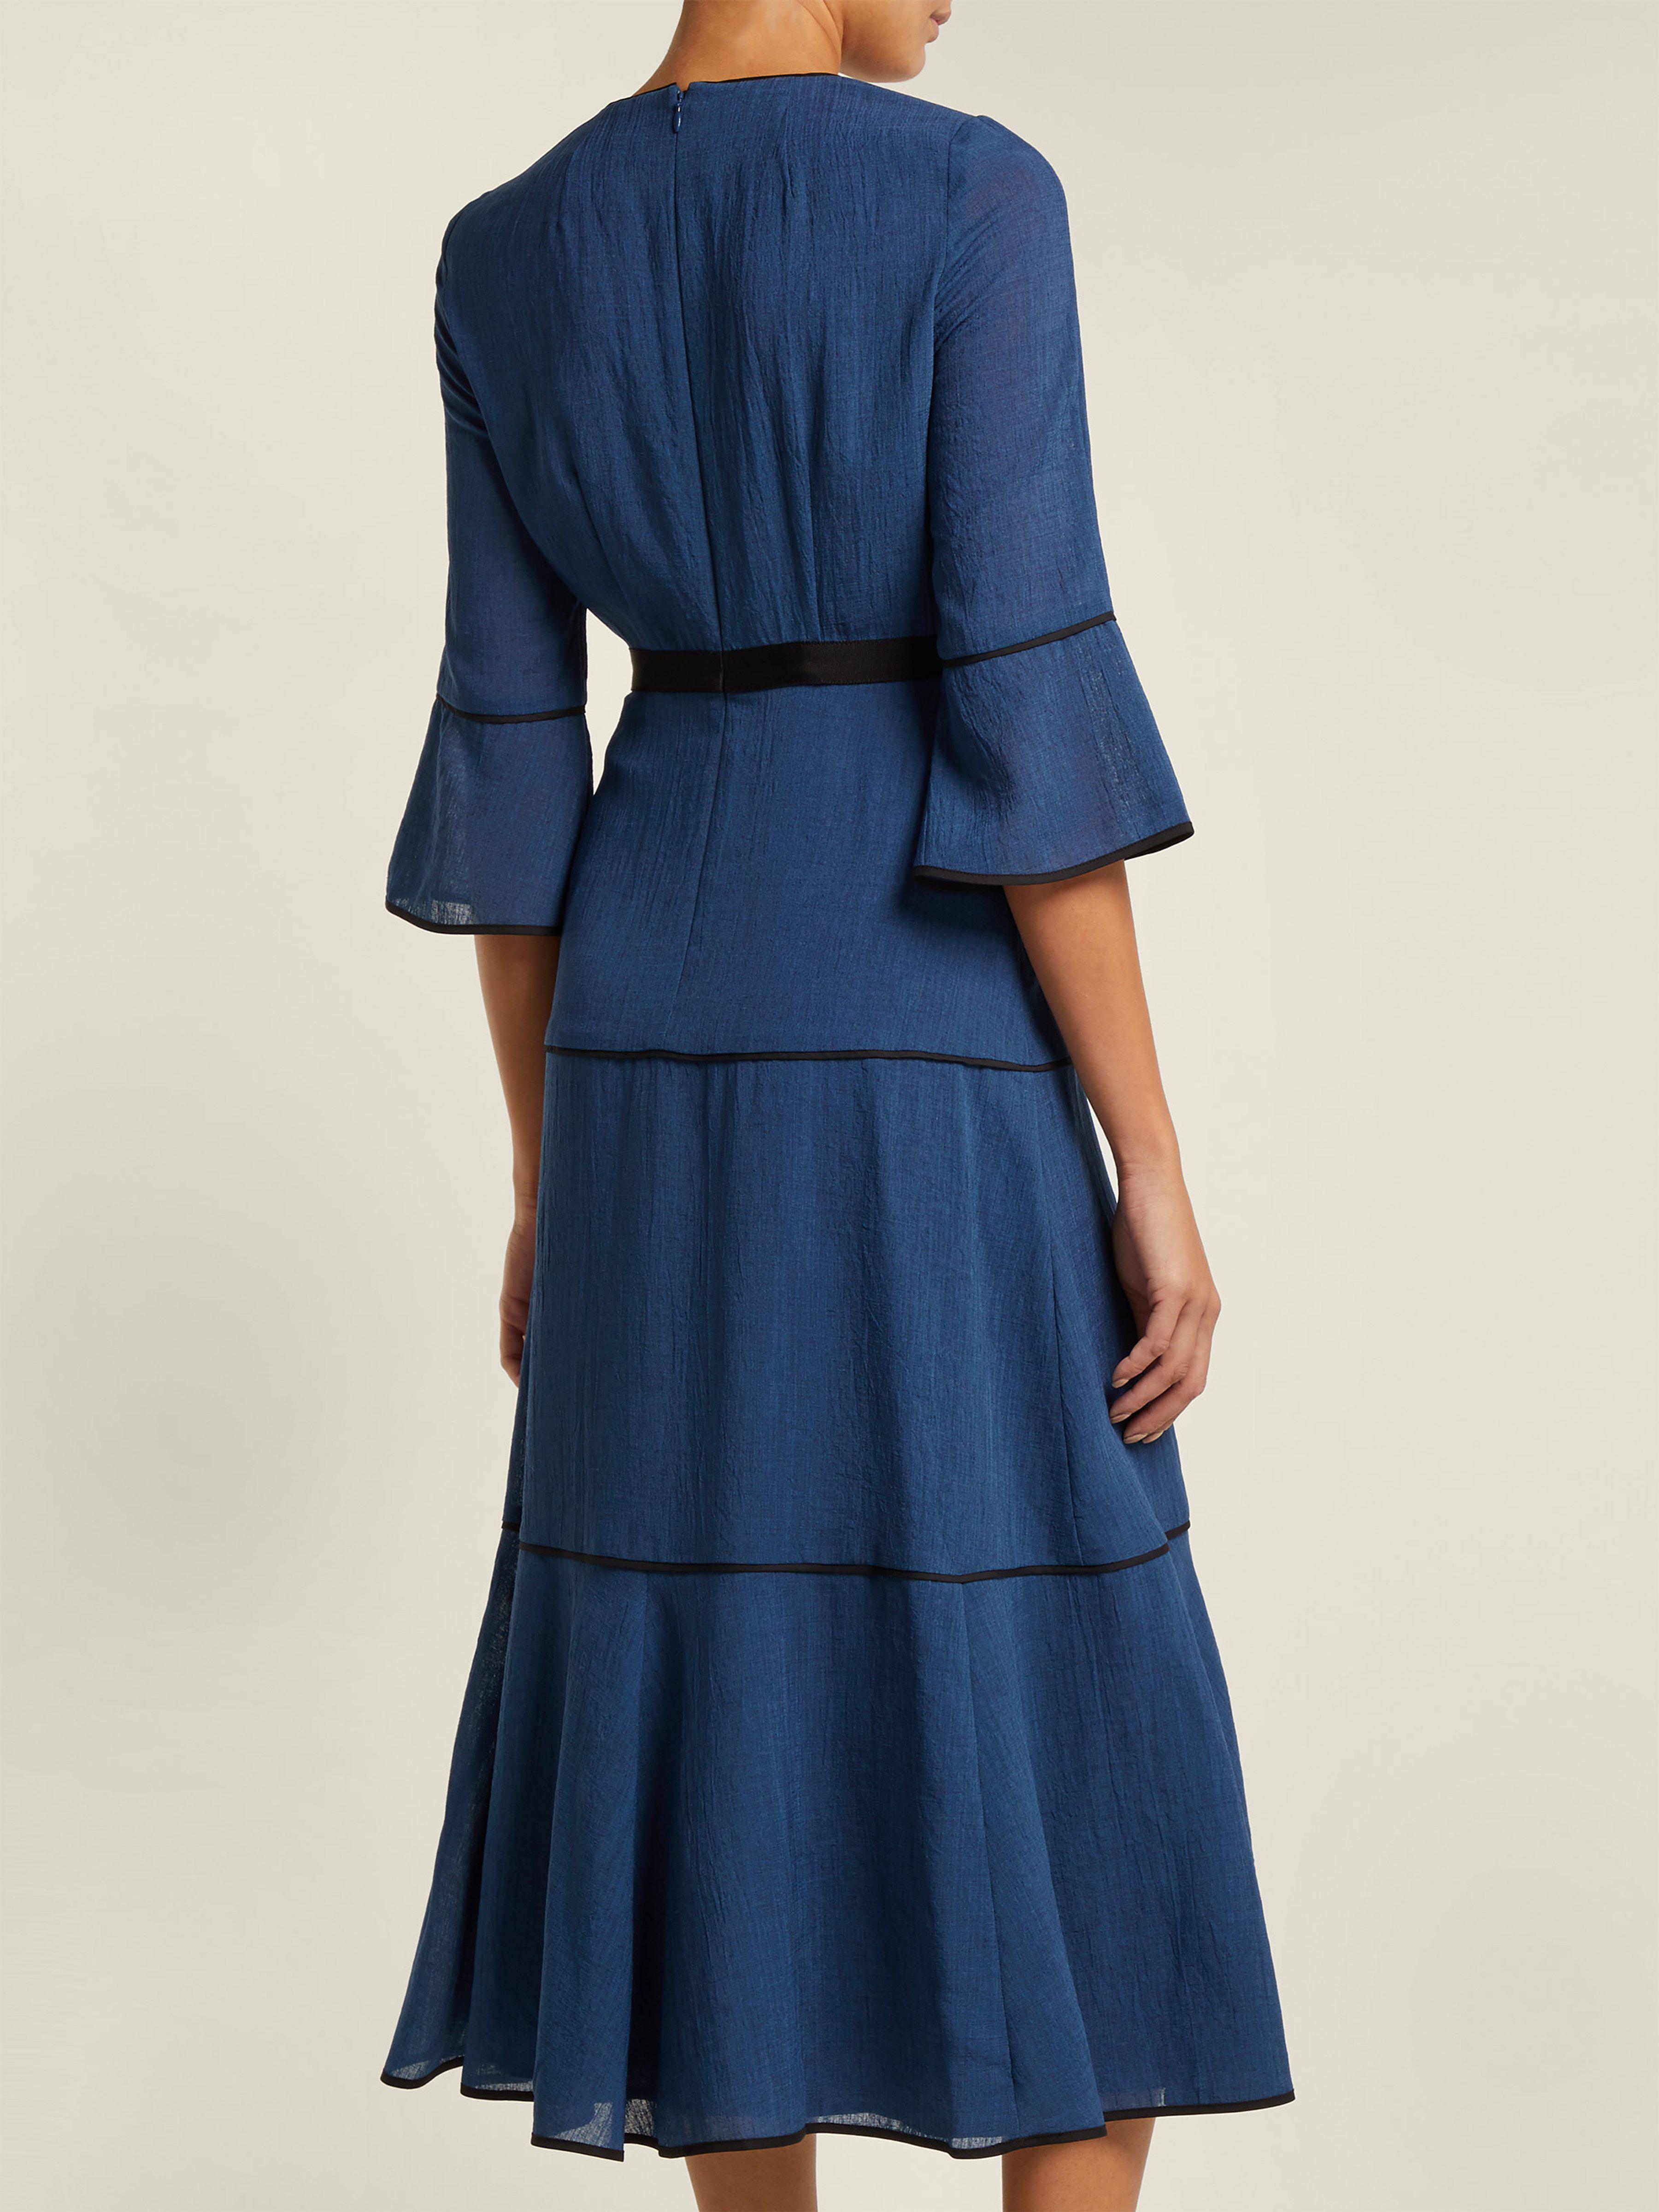 Cefinn Tiered Voile Midi Dress in Blue - Lyst